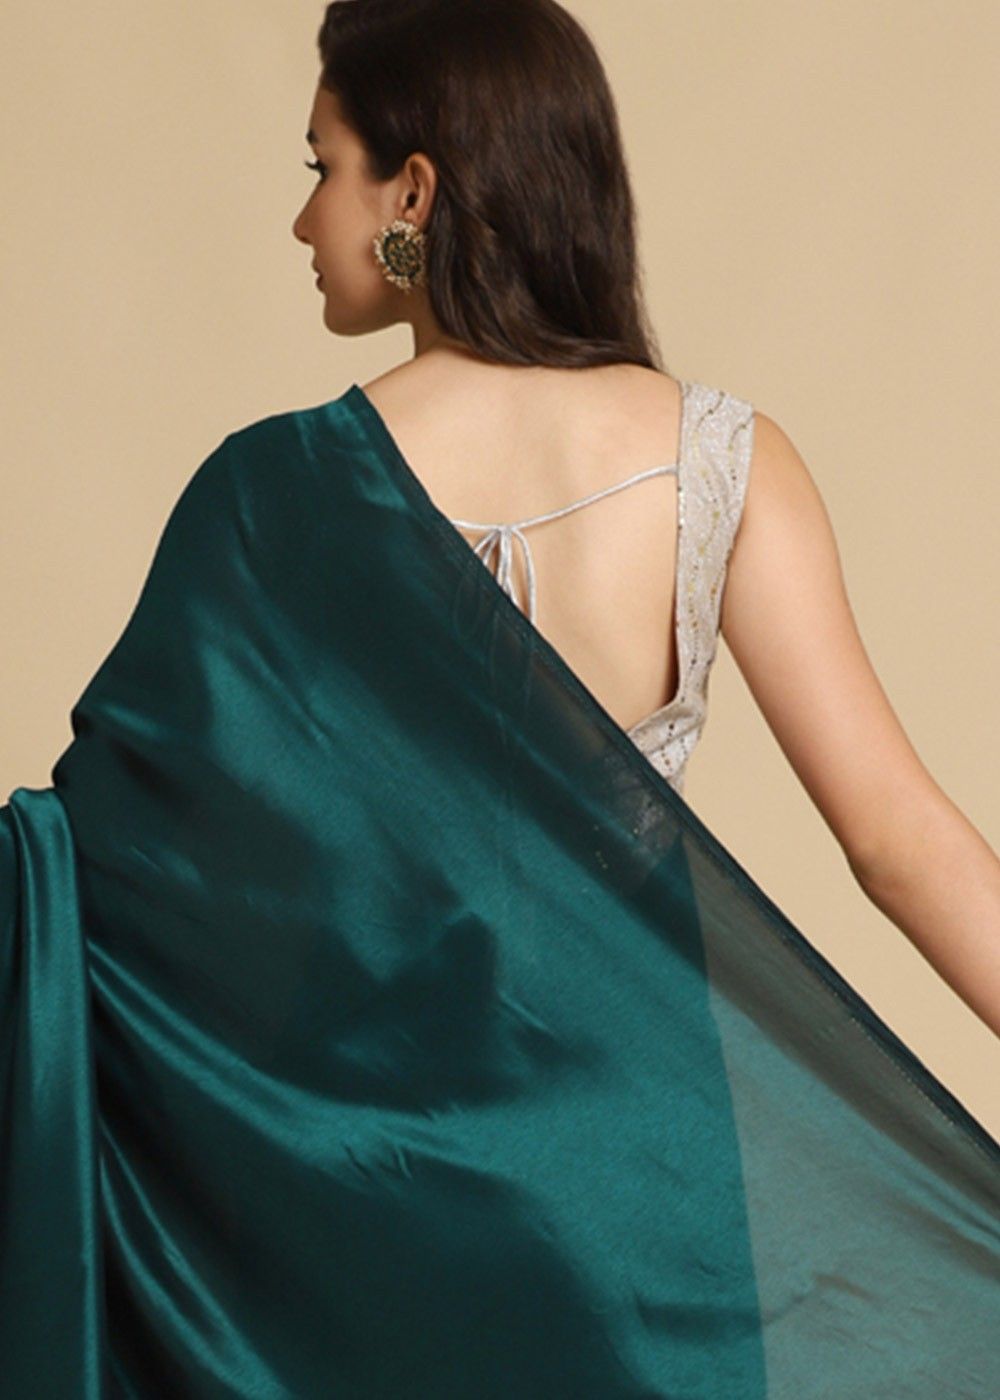 Trending Satin saree designs || Blouse ideas to pair with plain satin sarees  - YouTube